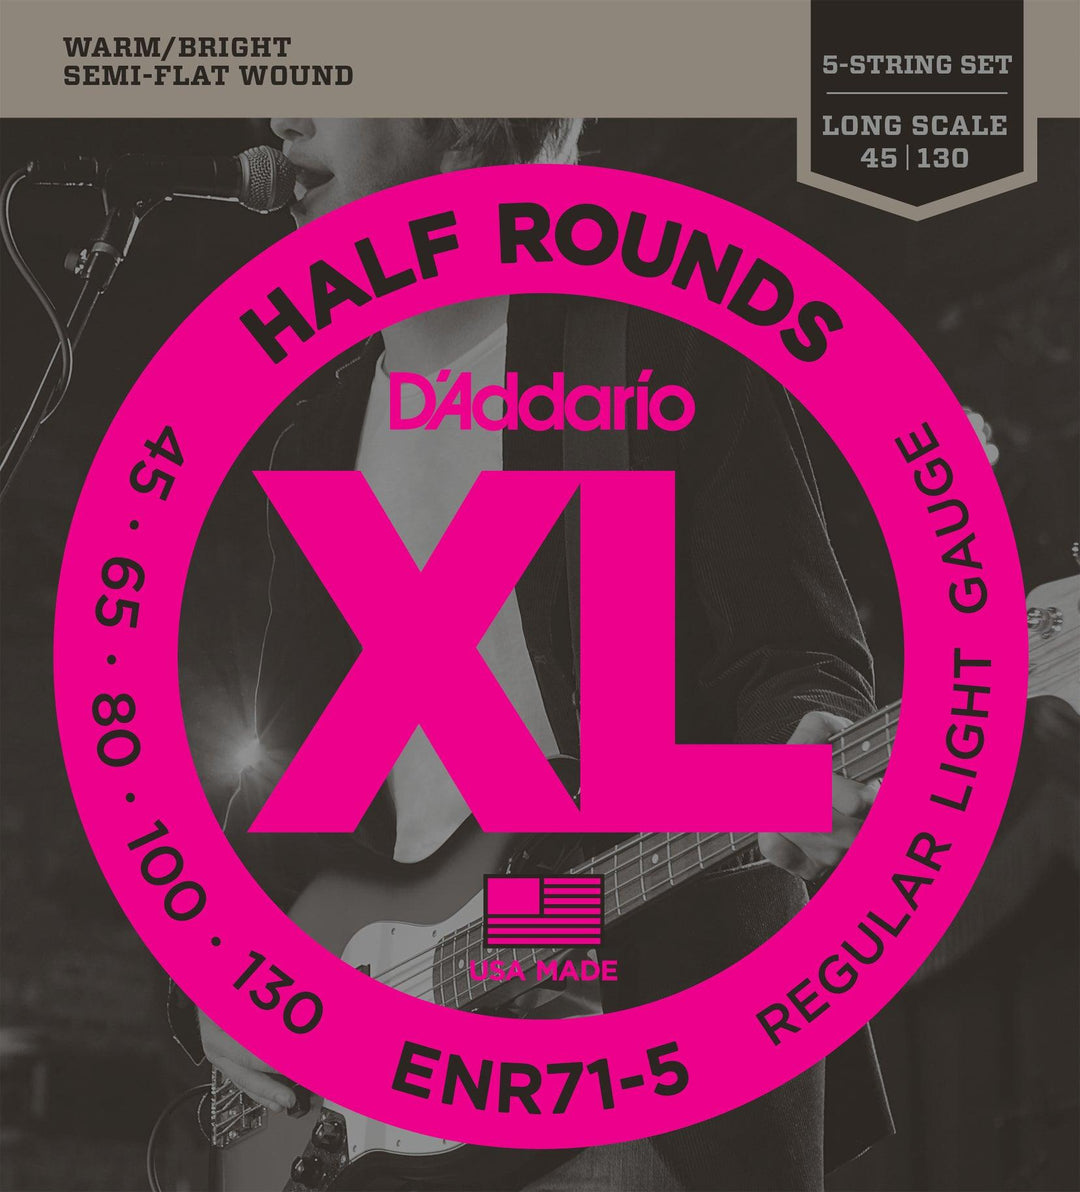 D'Addario XL Half Round 5-String Bass Guitar Set, Regular Light .045-.130 Long Scale - A Strings